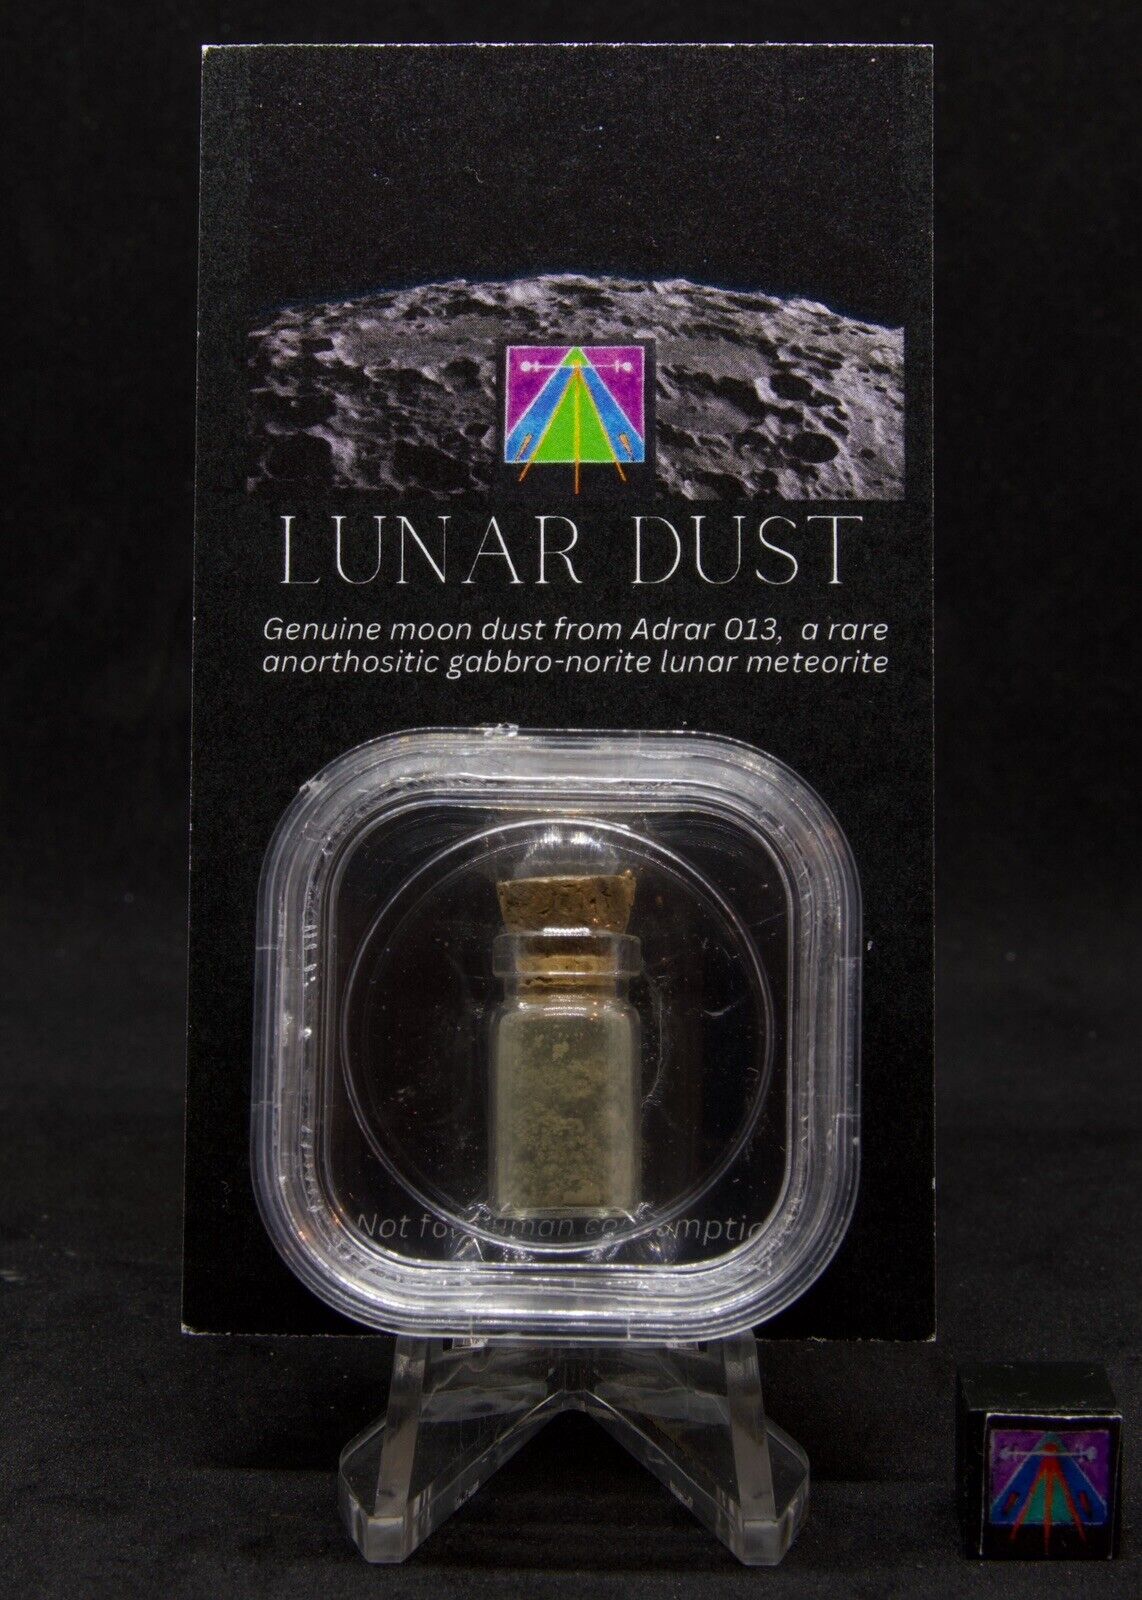 Genuine Rare MOON DUST From Lunar Meteorite Adrar 013 - A Unique Gift Idea